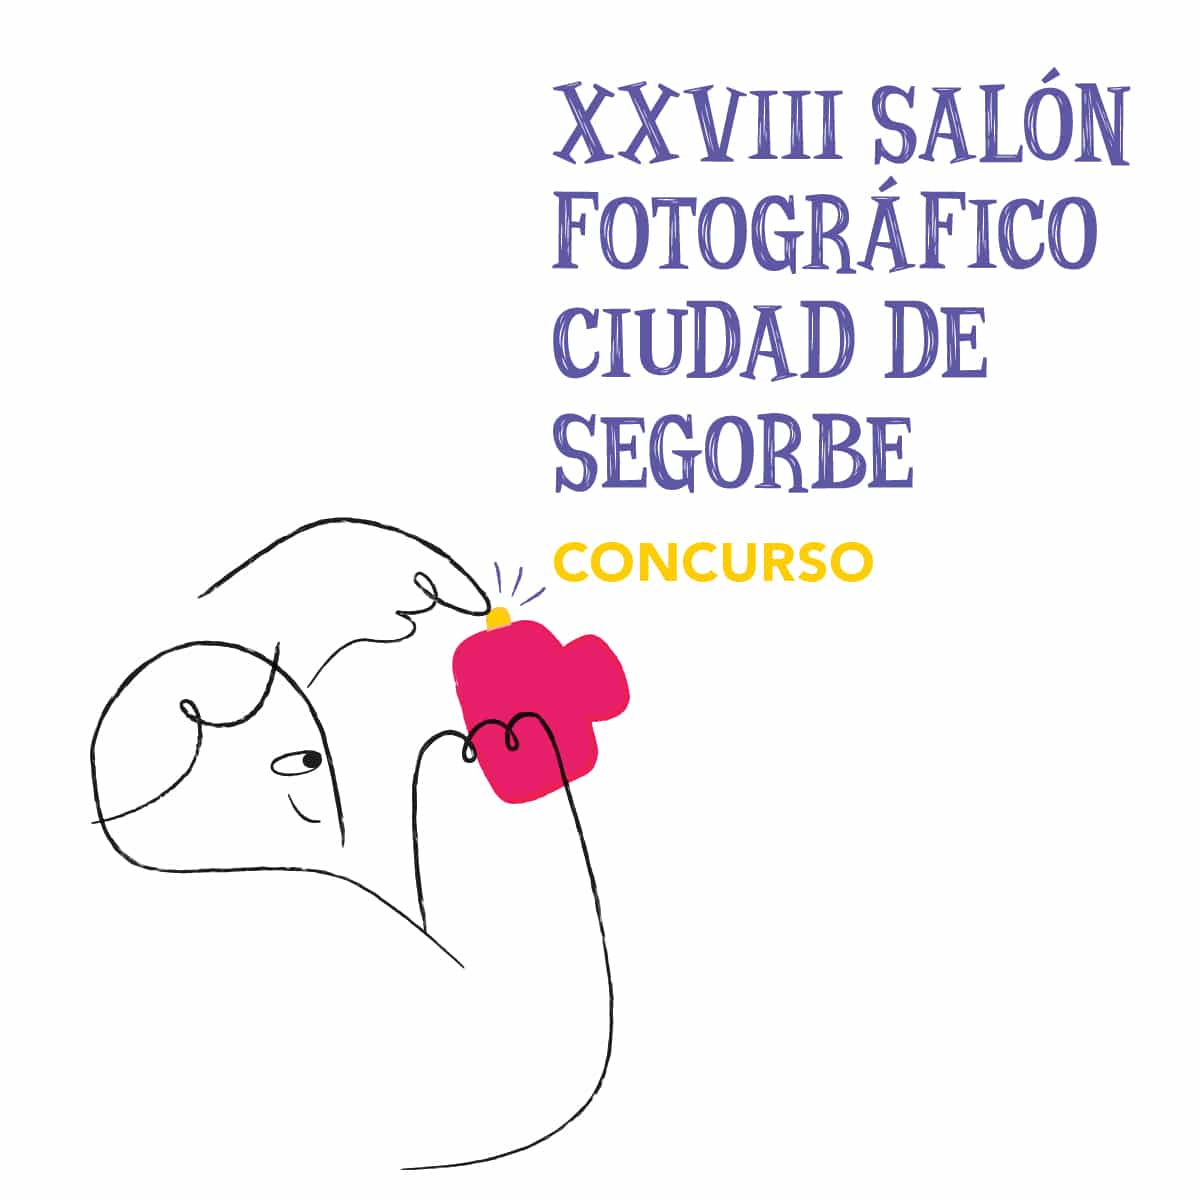 XXVIII Saló Fotogràfic Ciutat de Segorbe